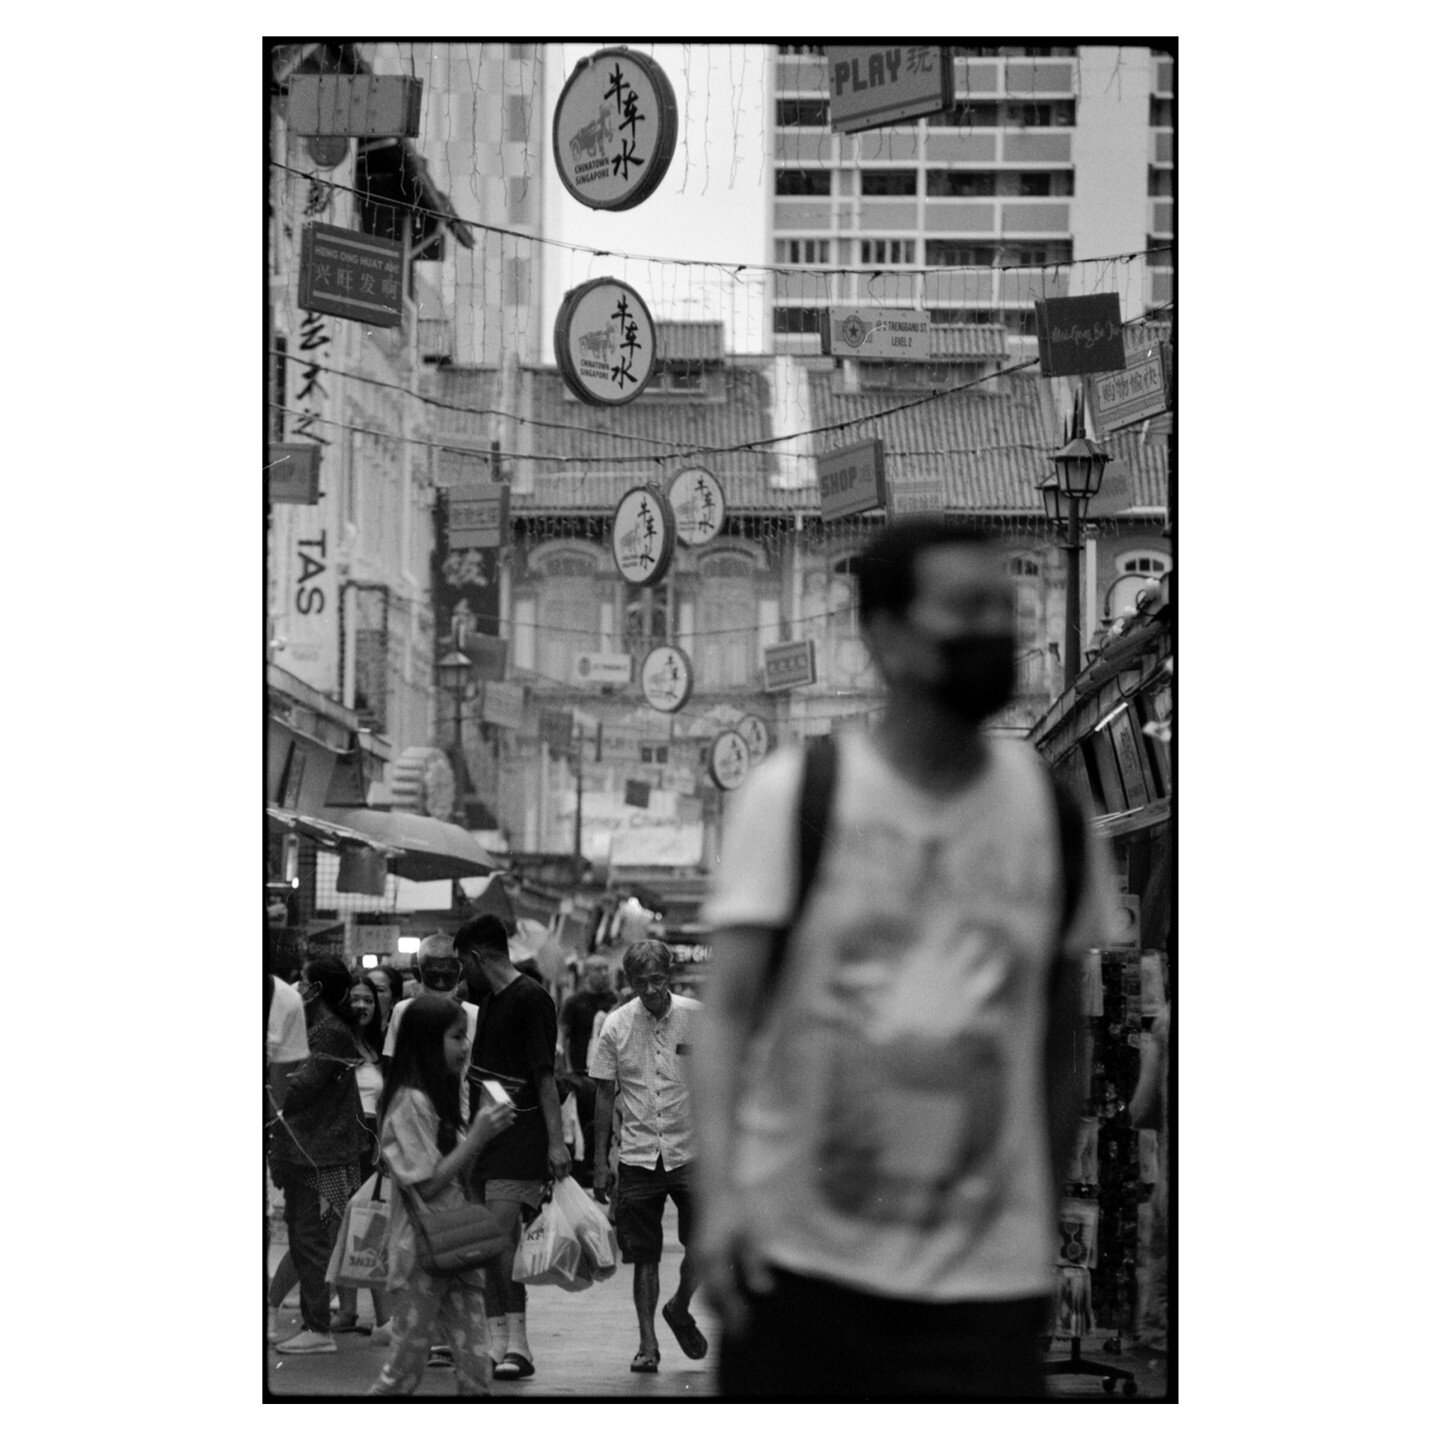 Chinatown noir | Singapore

📷 Canon AE-1
🎞 Cinestill BWXX

#singapore #streetphotography #dcfilmcollective #canonae1 #cinestill #cinestillbwxx